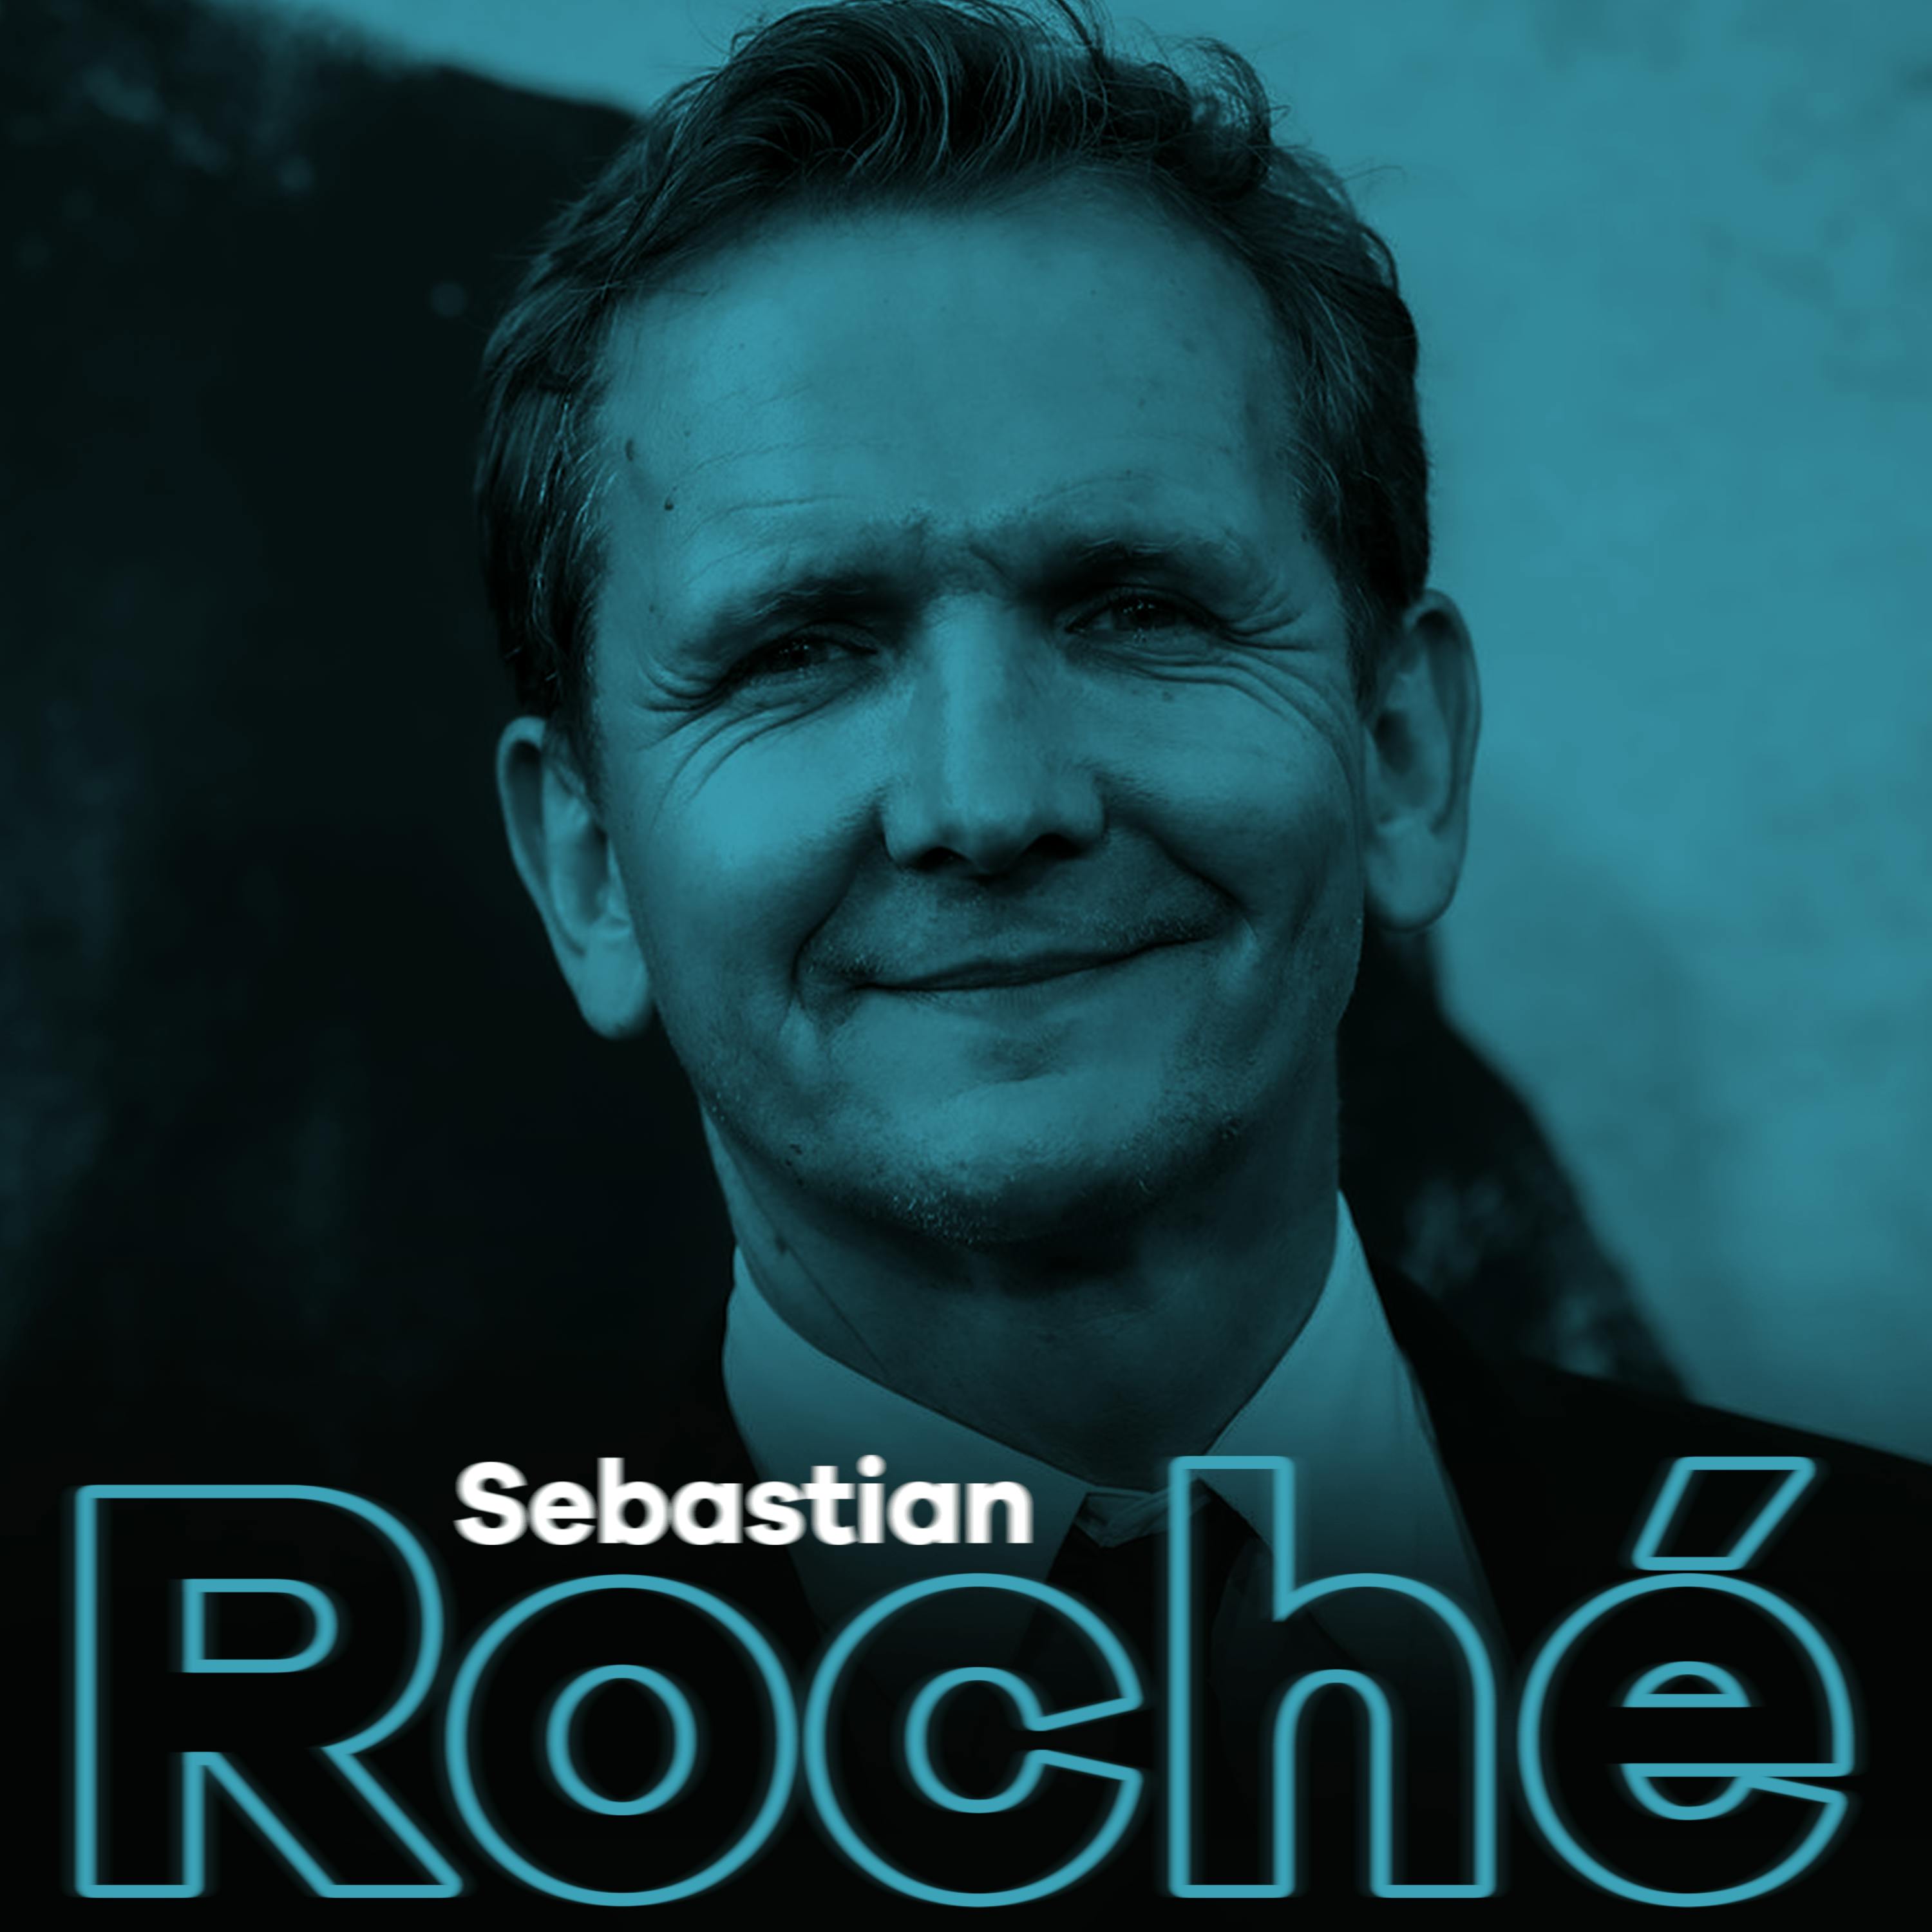 Supernatural’s Sebastian Roché: Broke on a Boat, Rejection, & Divorce